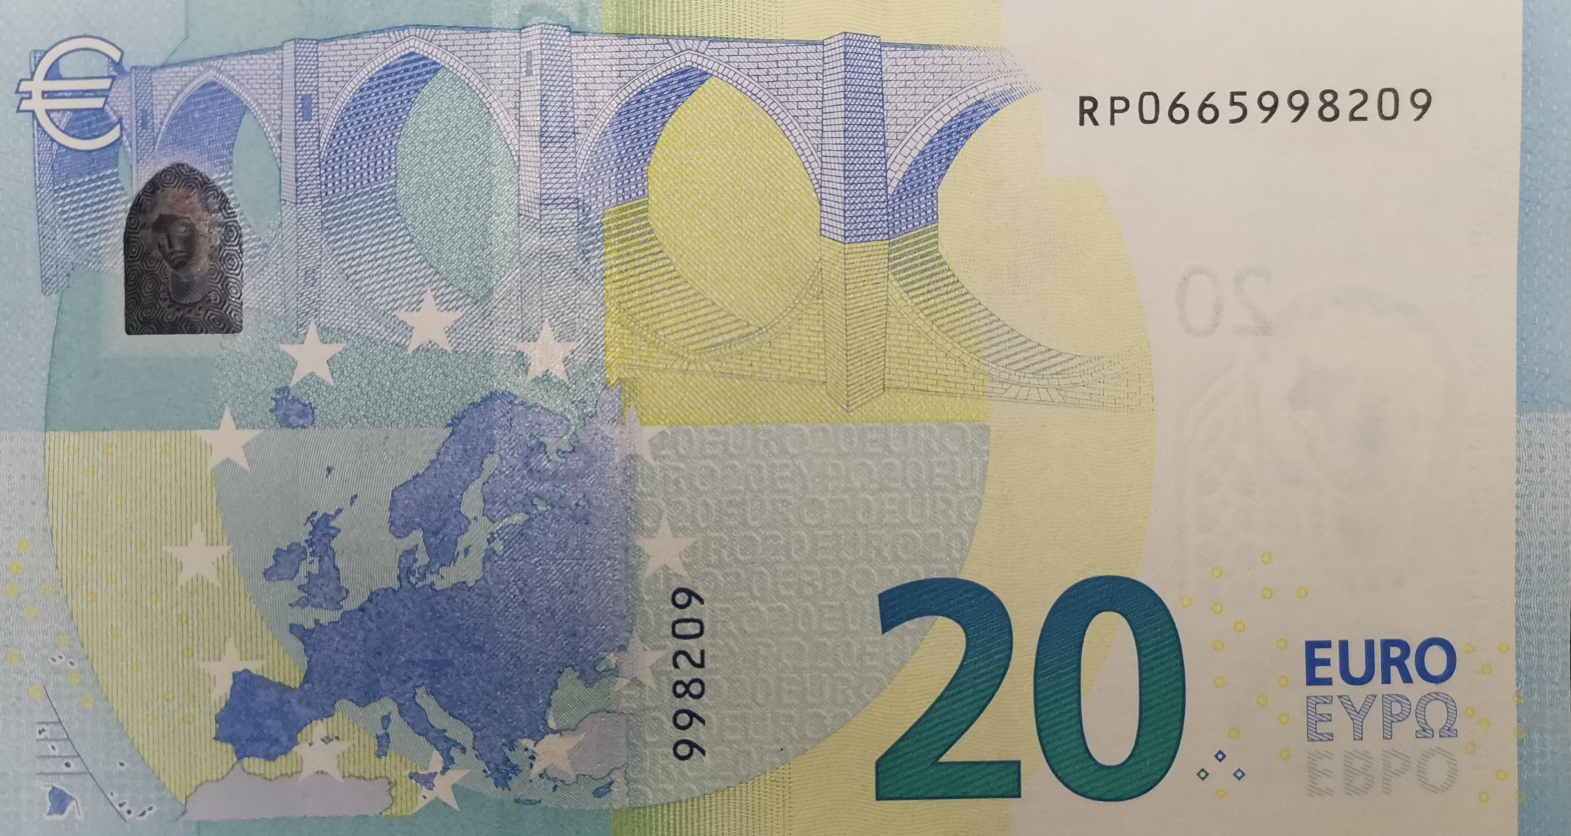 European Monetary Union New Signature Euro Note B110r4 Confirmed Banknotenews